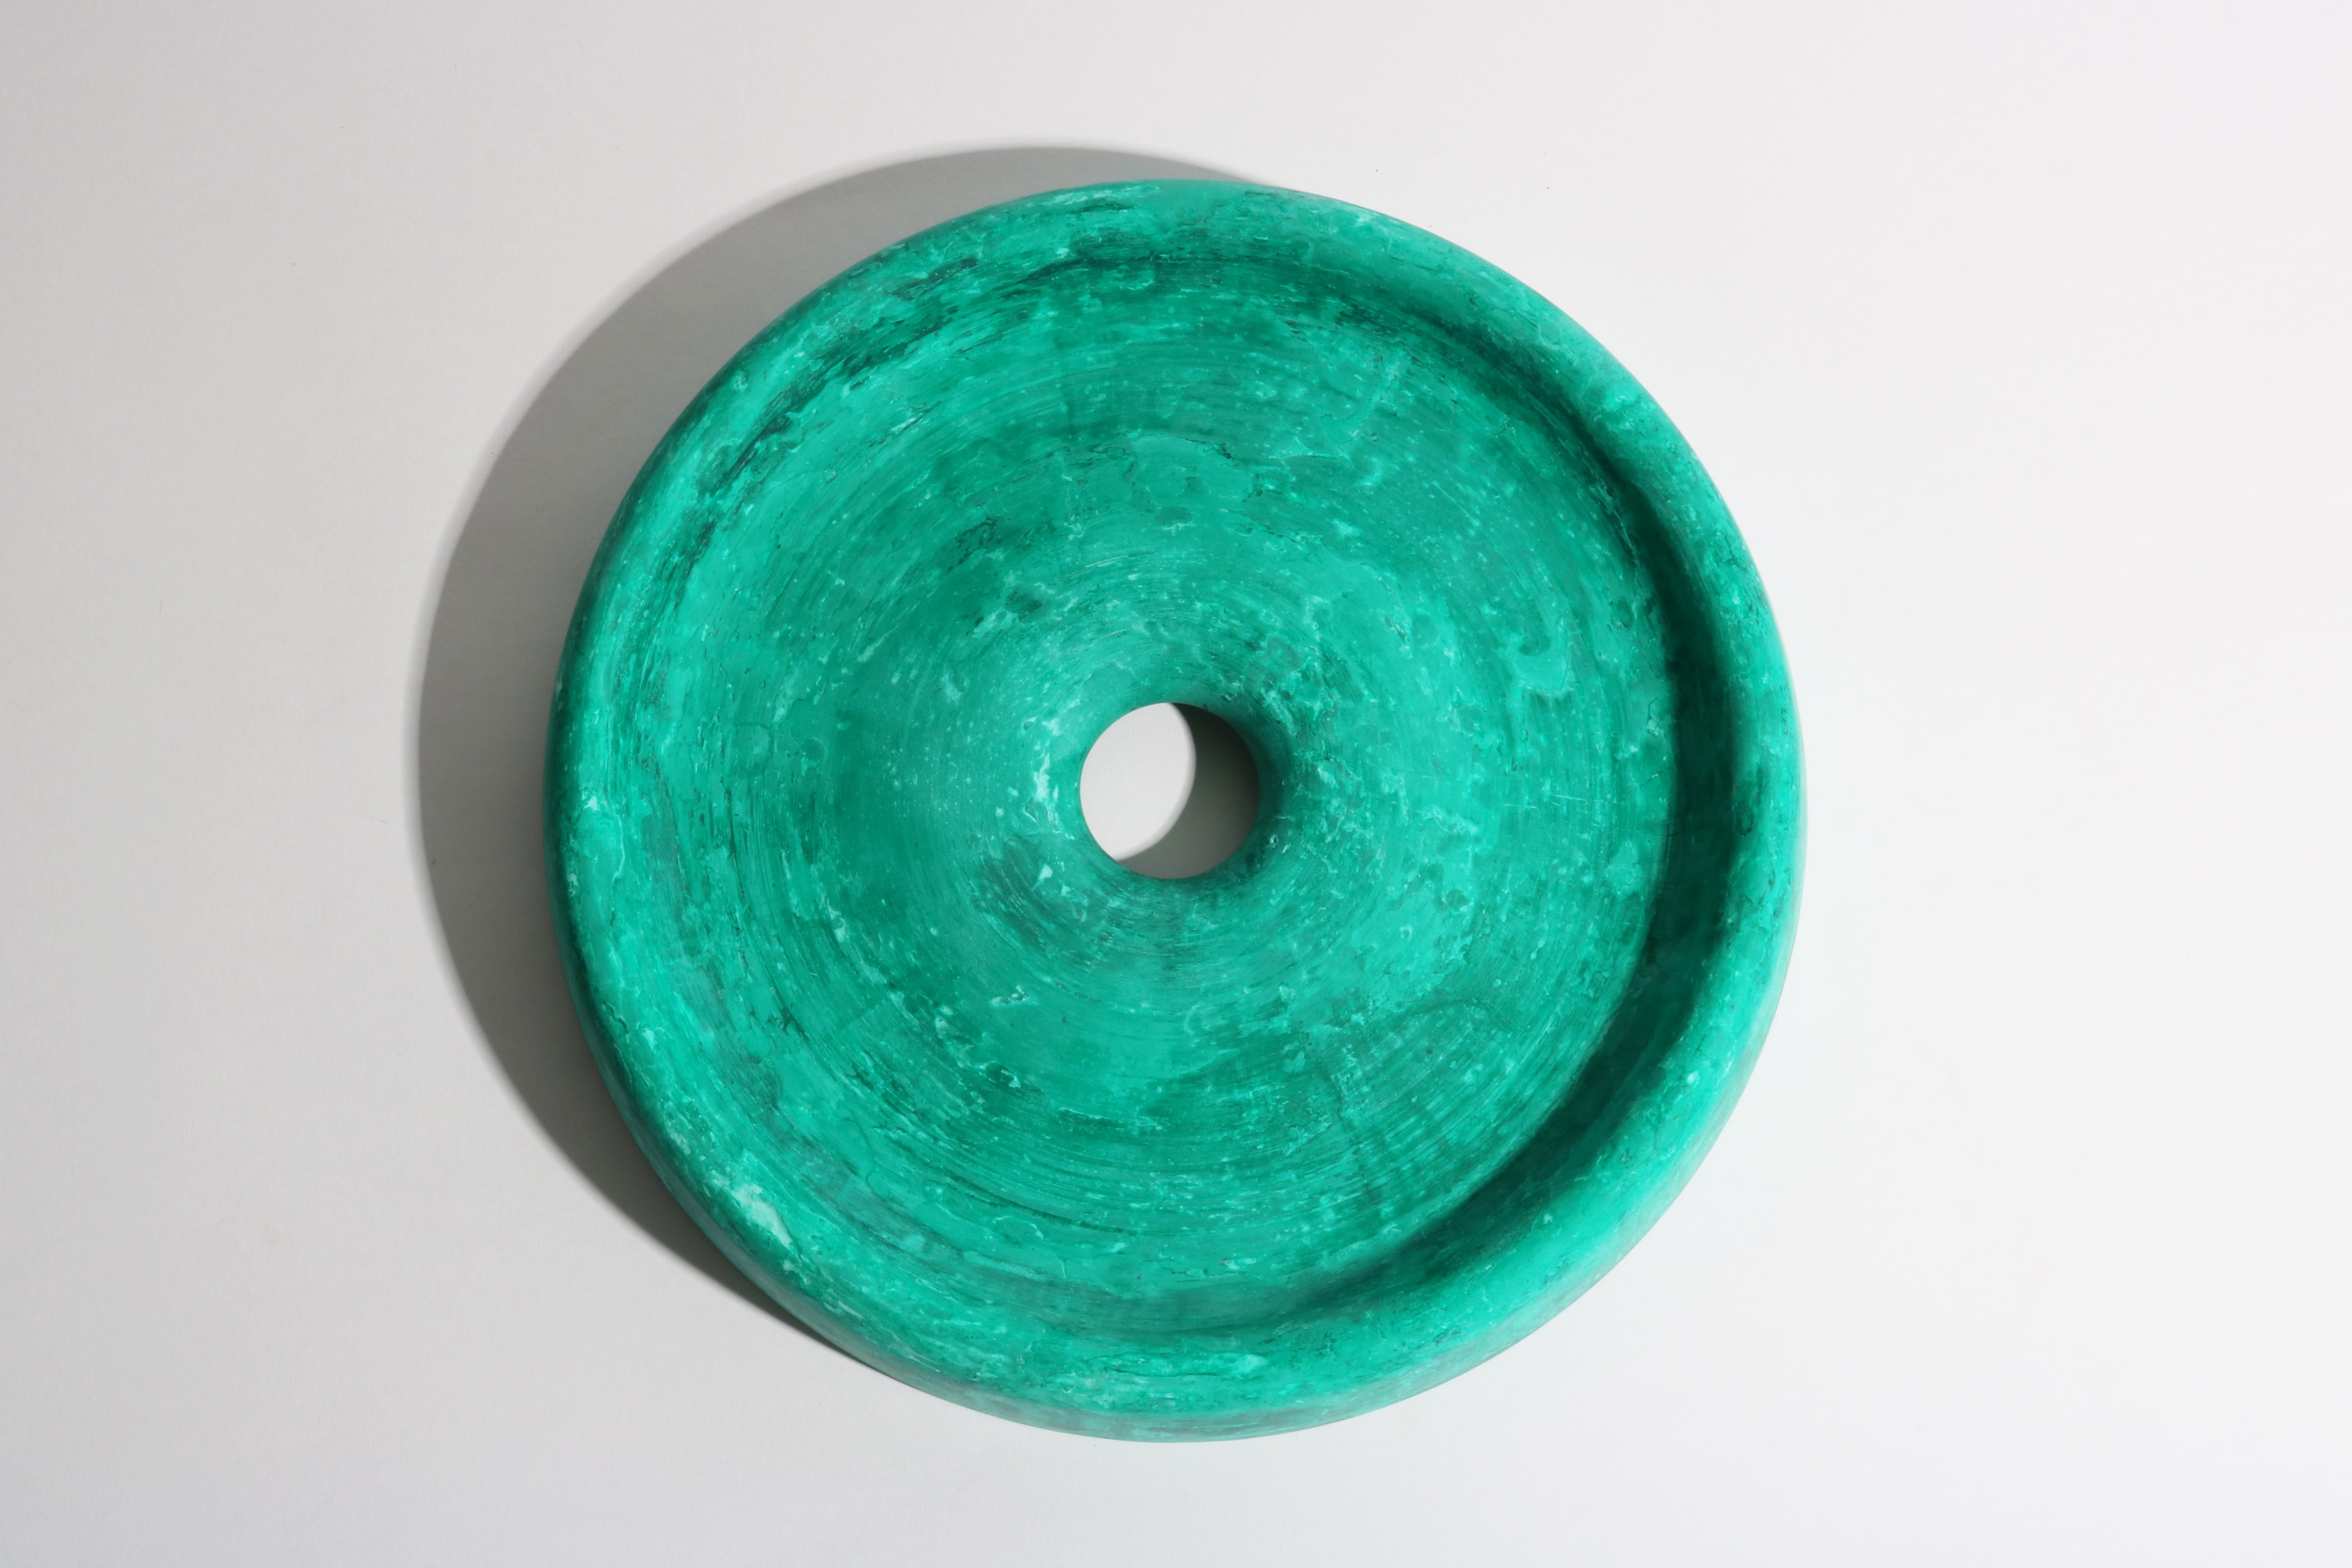 Acrylic Forest Green Twirl Bowl by Lenny Stöpp For Sale